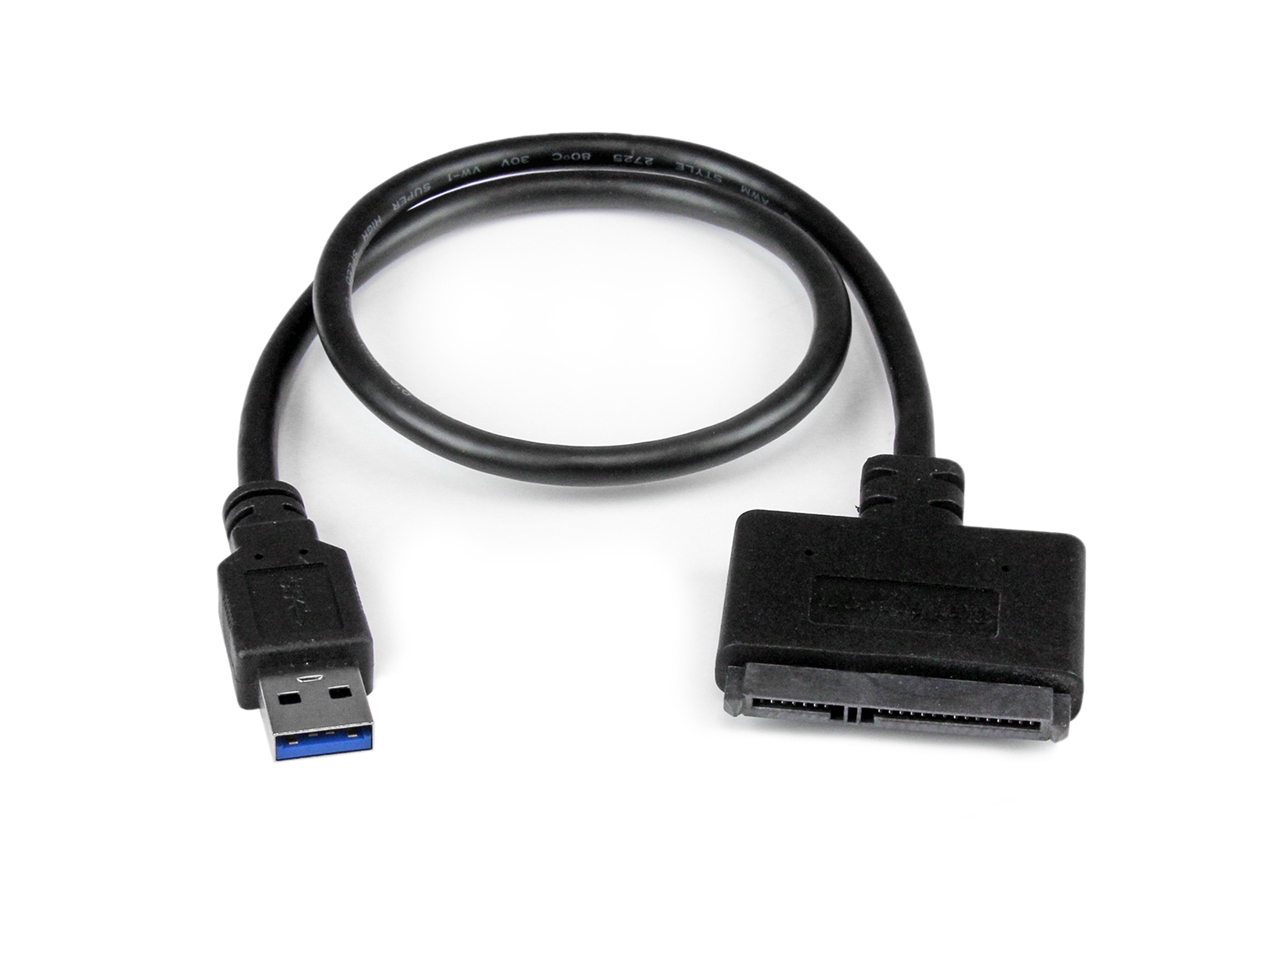 USB 2.5” Hard Drive Adapter at Cables N More